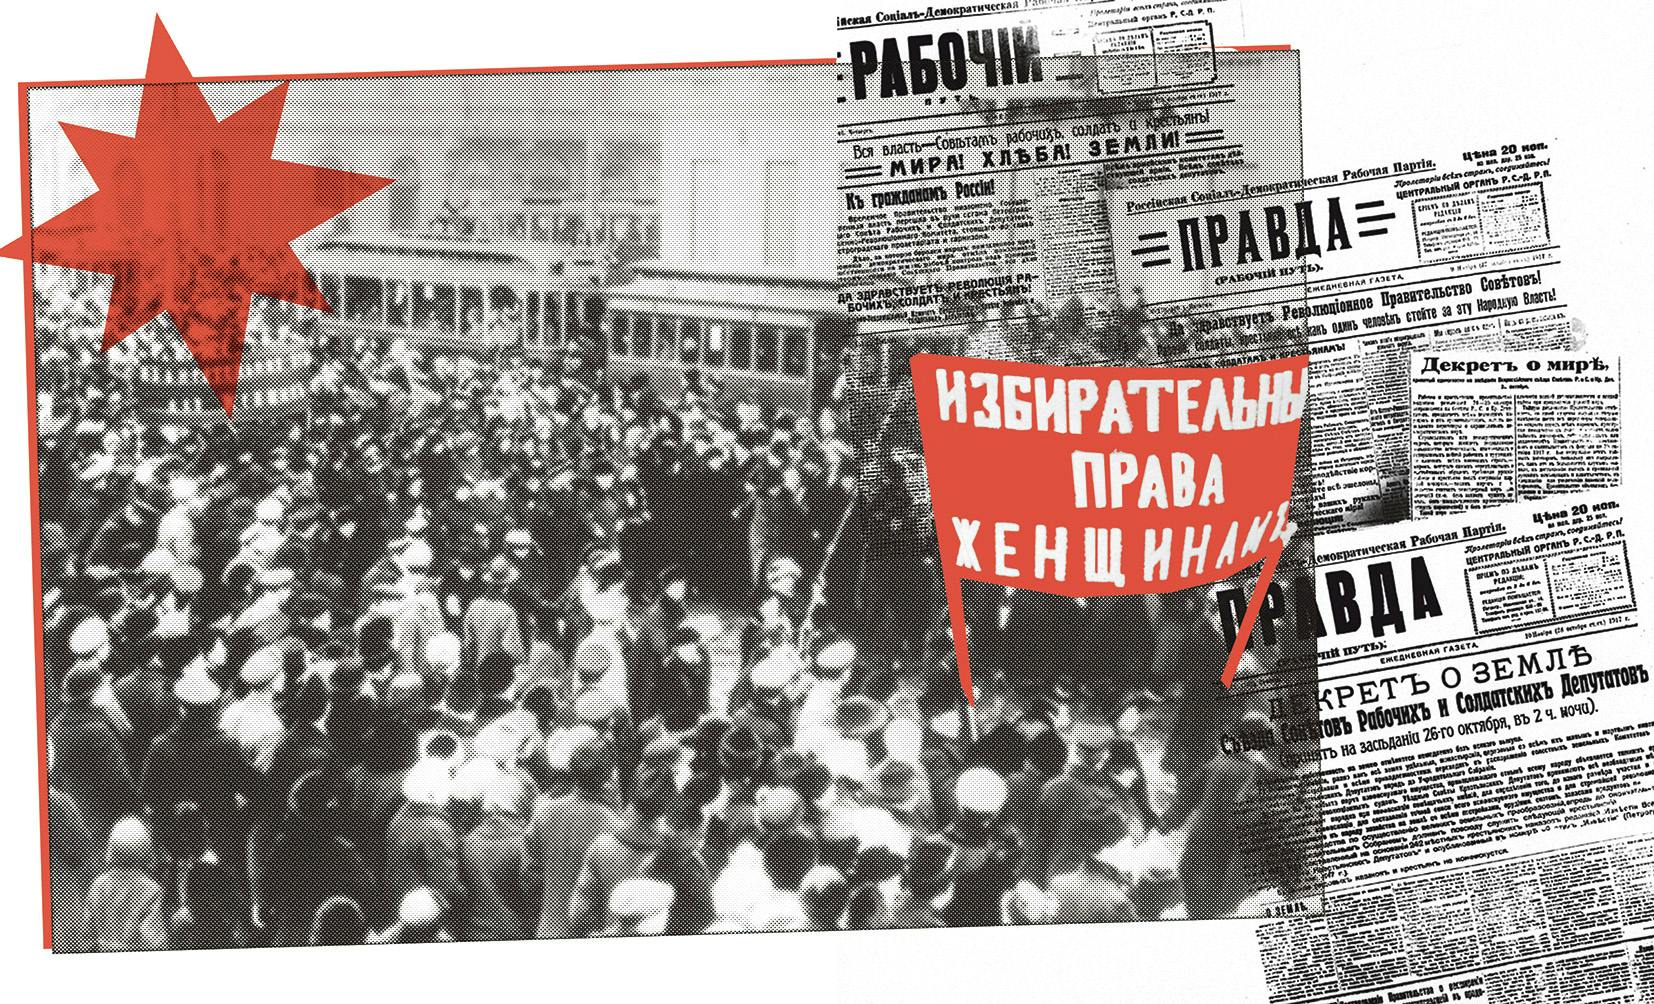 'Pravda': mirror of the revolution